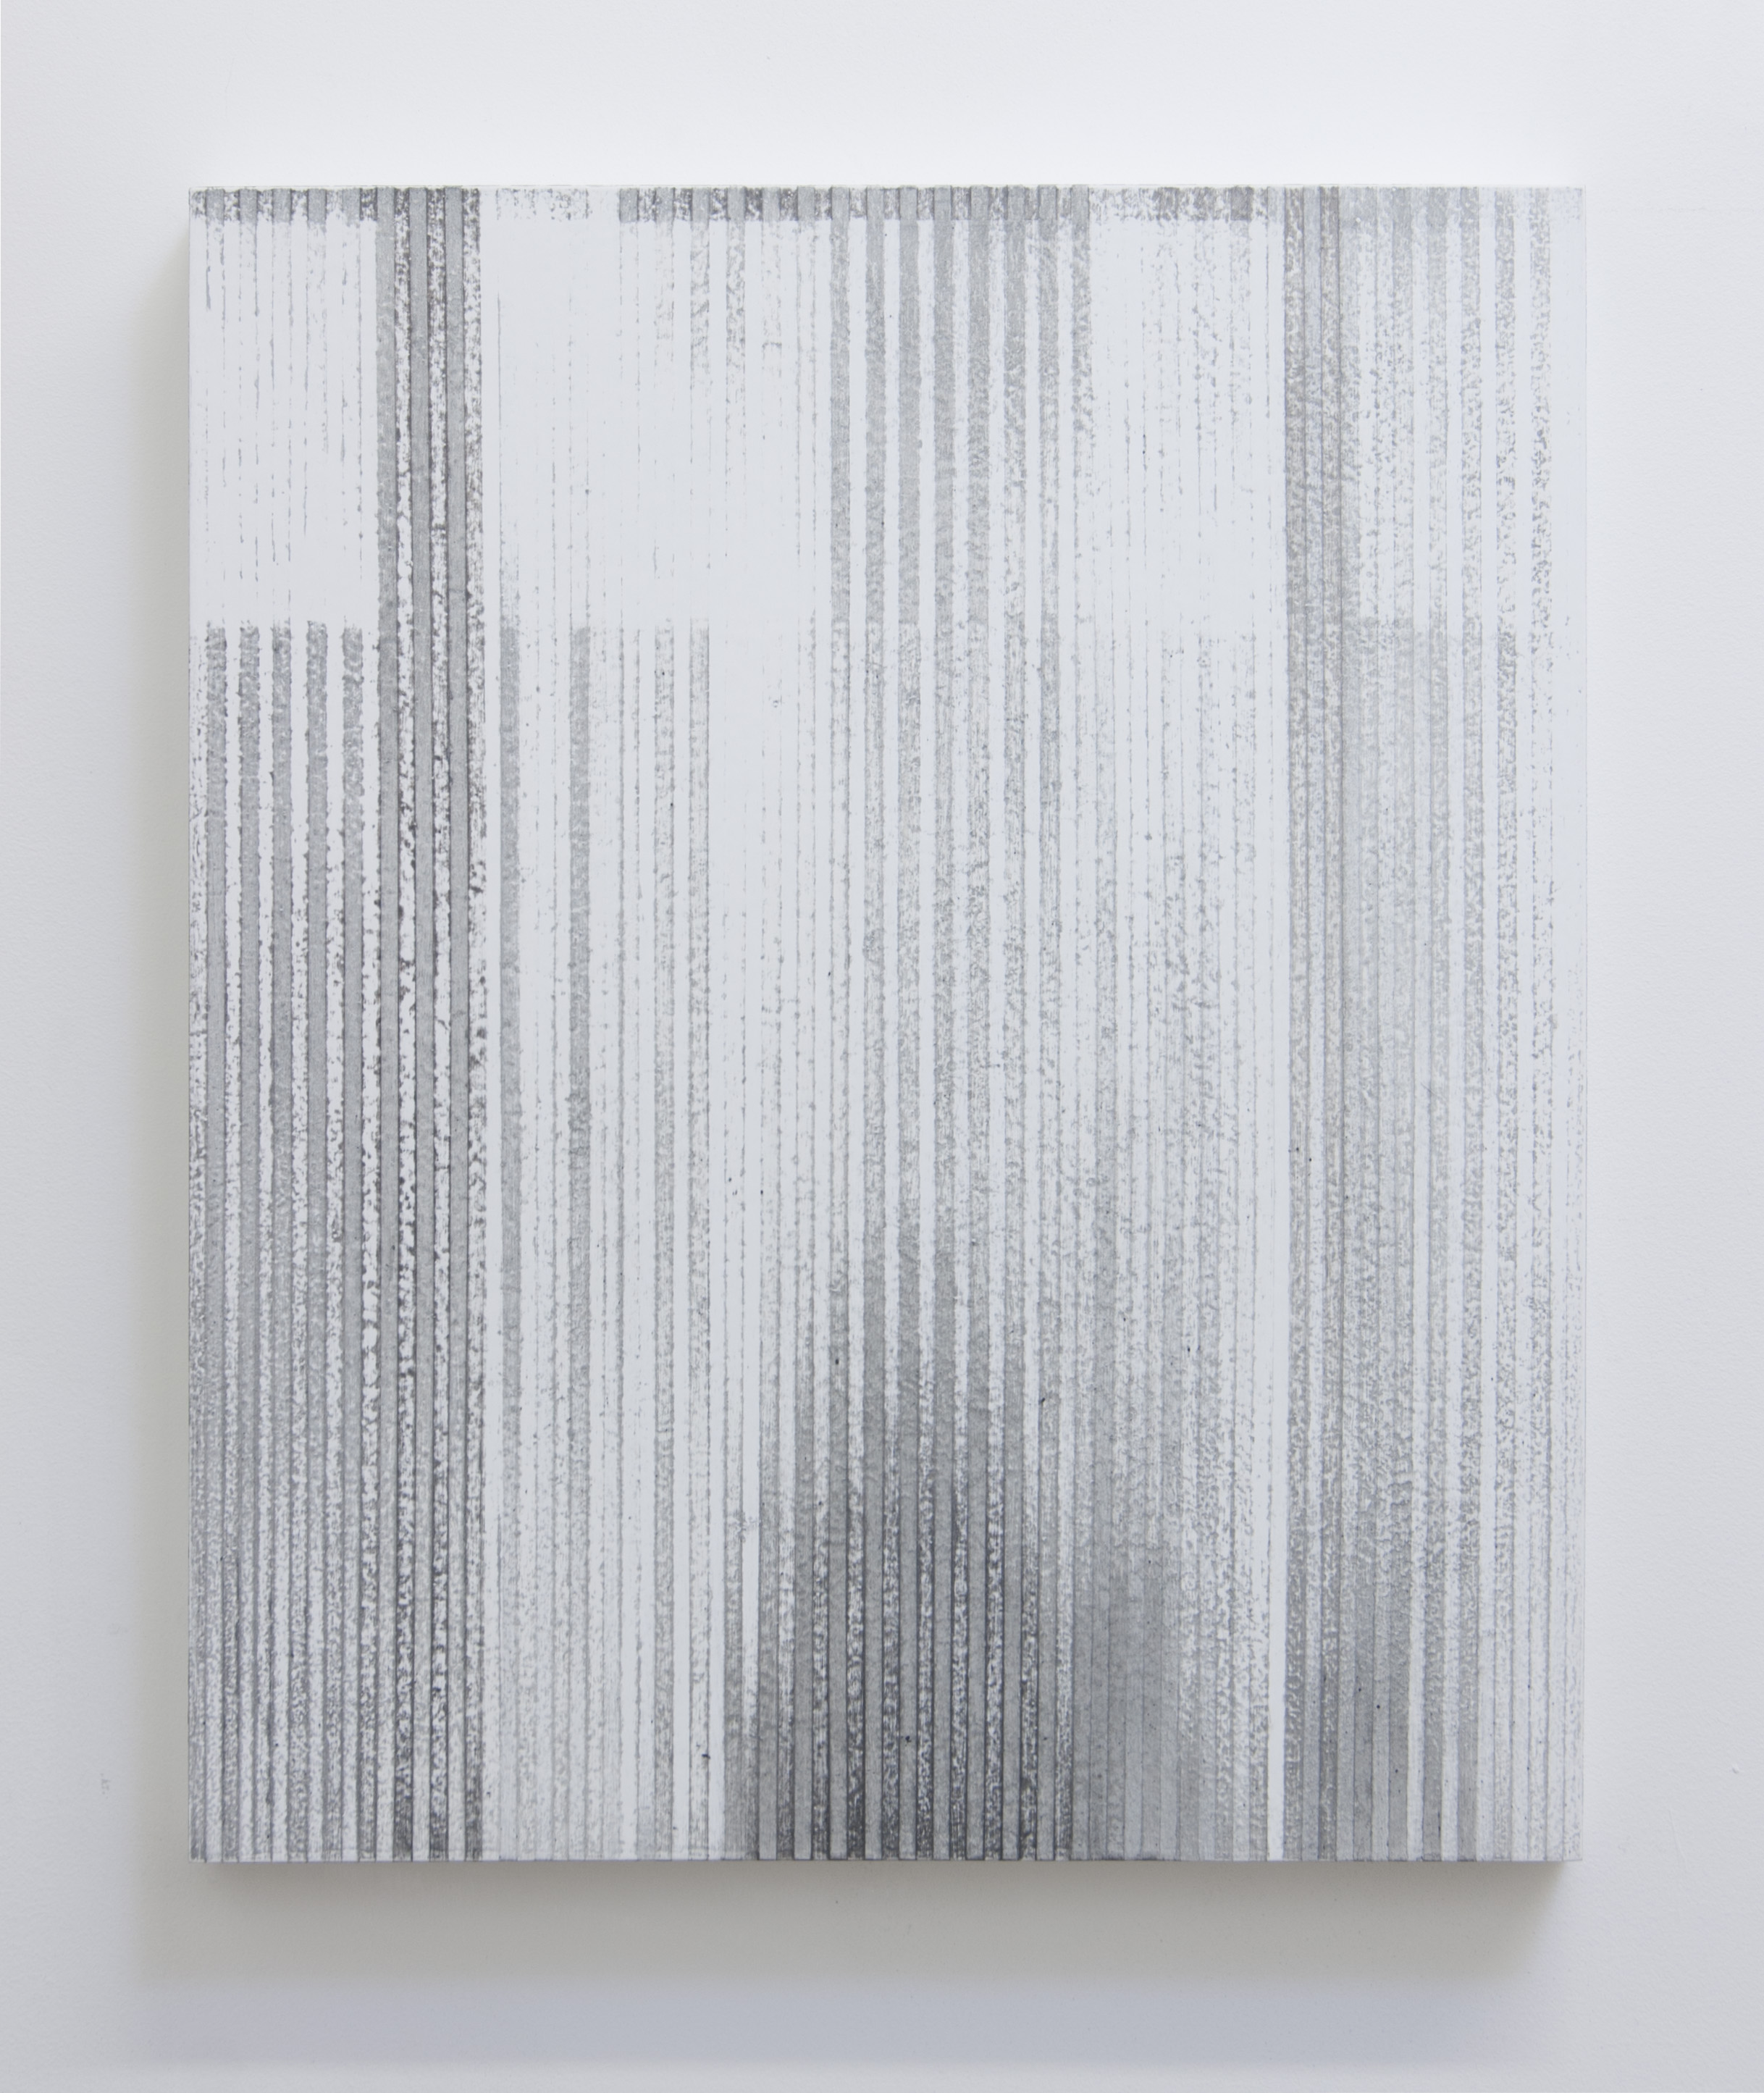  Bloodless Language II, 2014  Acrylic on panel, 24 x 20 inches 